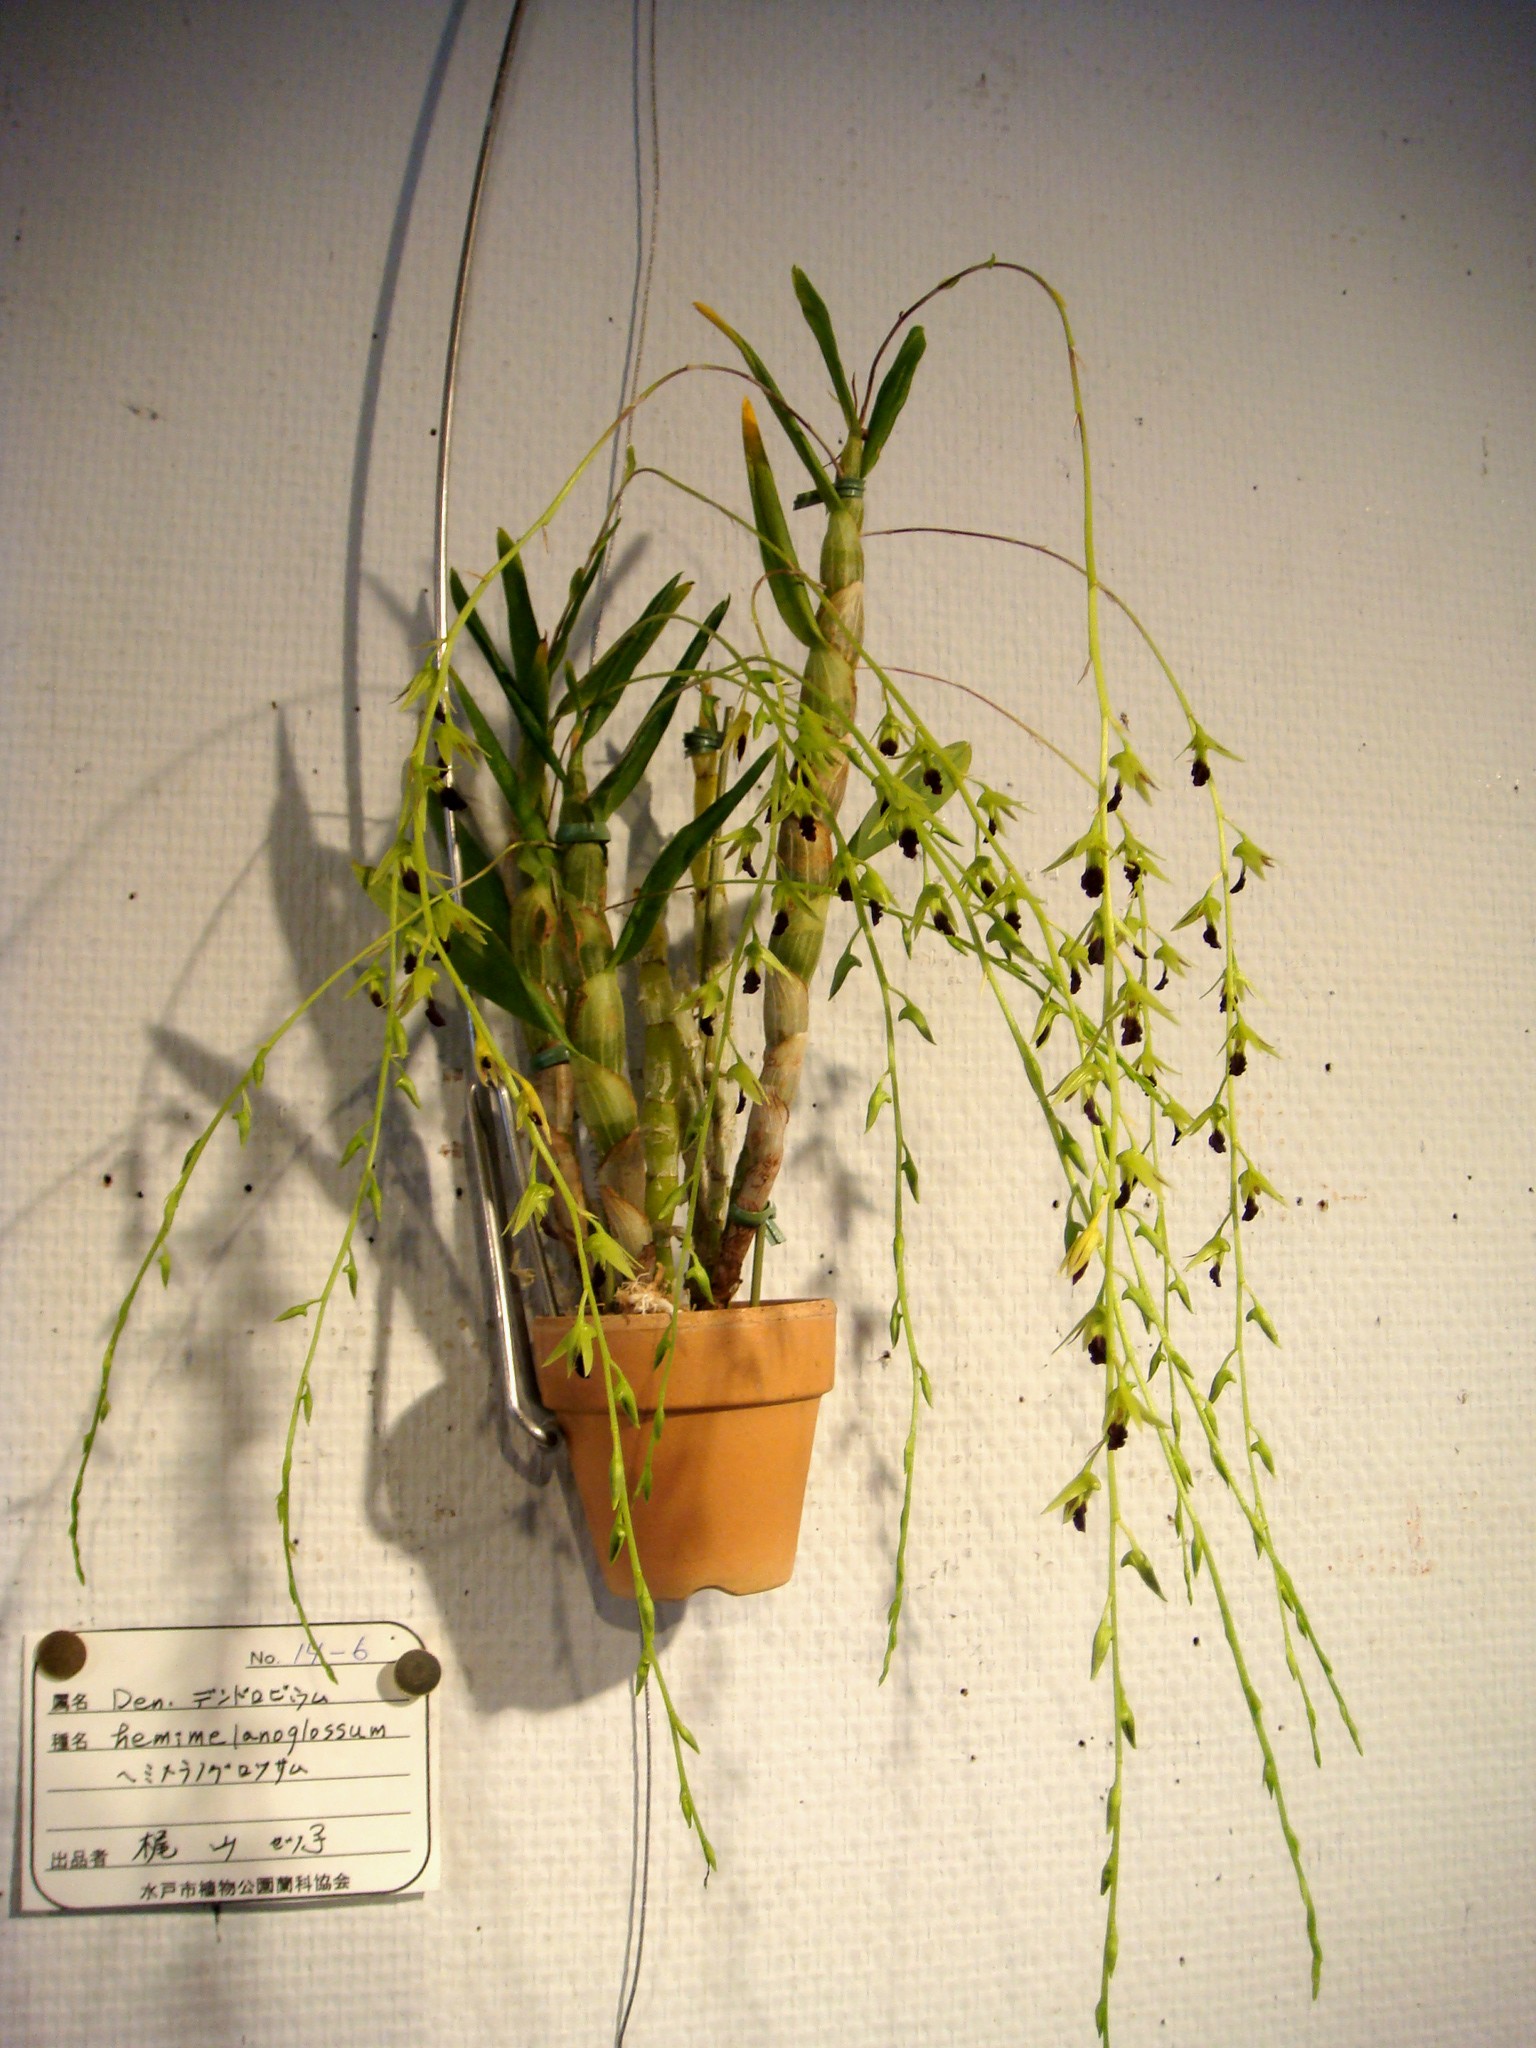 http://orchids.la.coocan.jp/Dendrobium/Dendrobium%20hemimelanoglossum/DSC03576.JPG